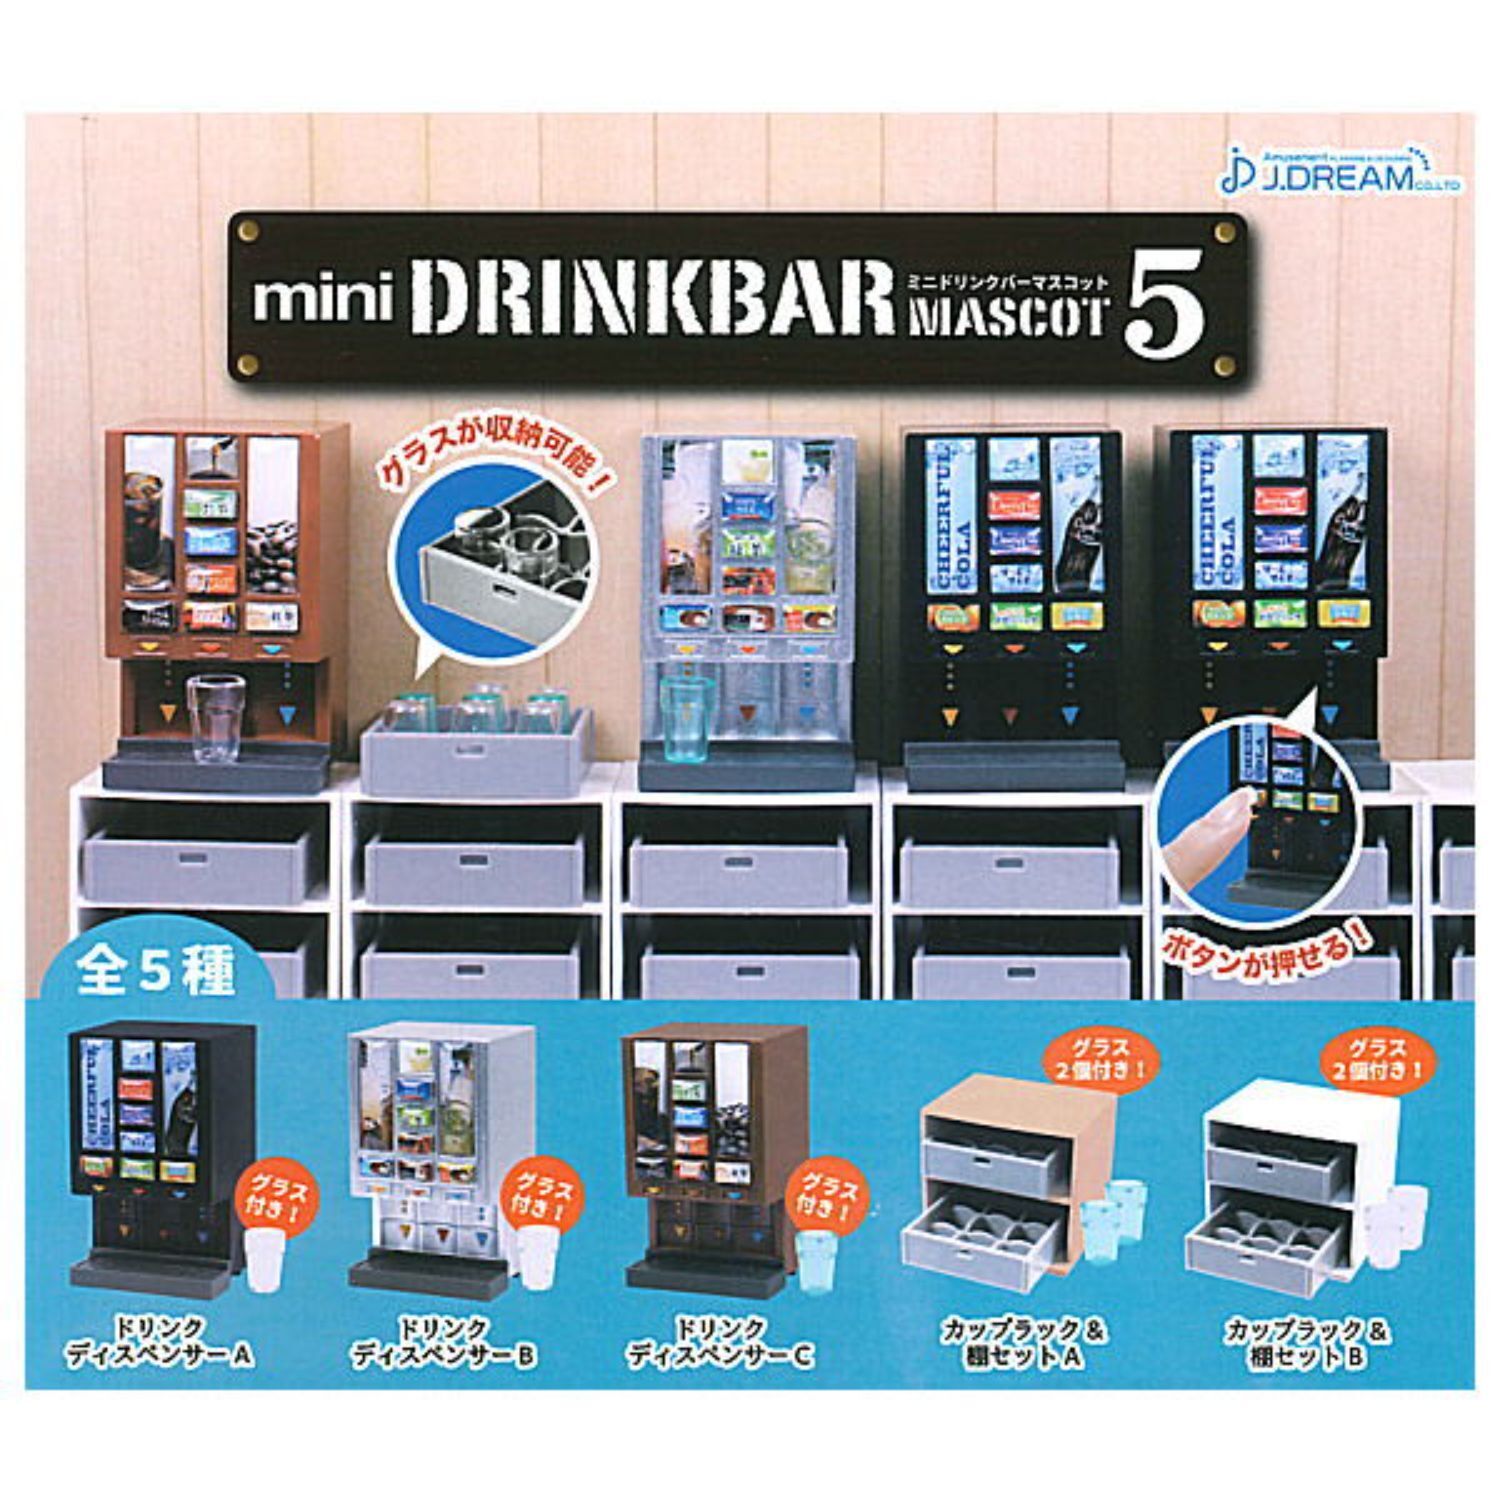 Mini drink bar mascot Part.5 Capsule Toy 5 Types Full Comp Set Gacha New